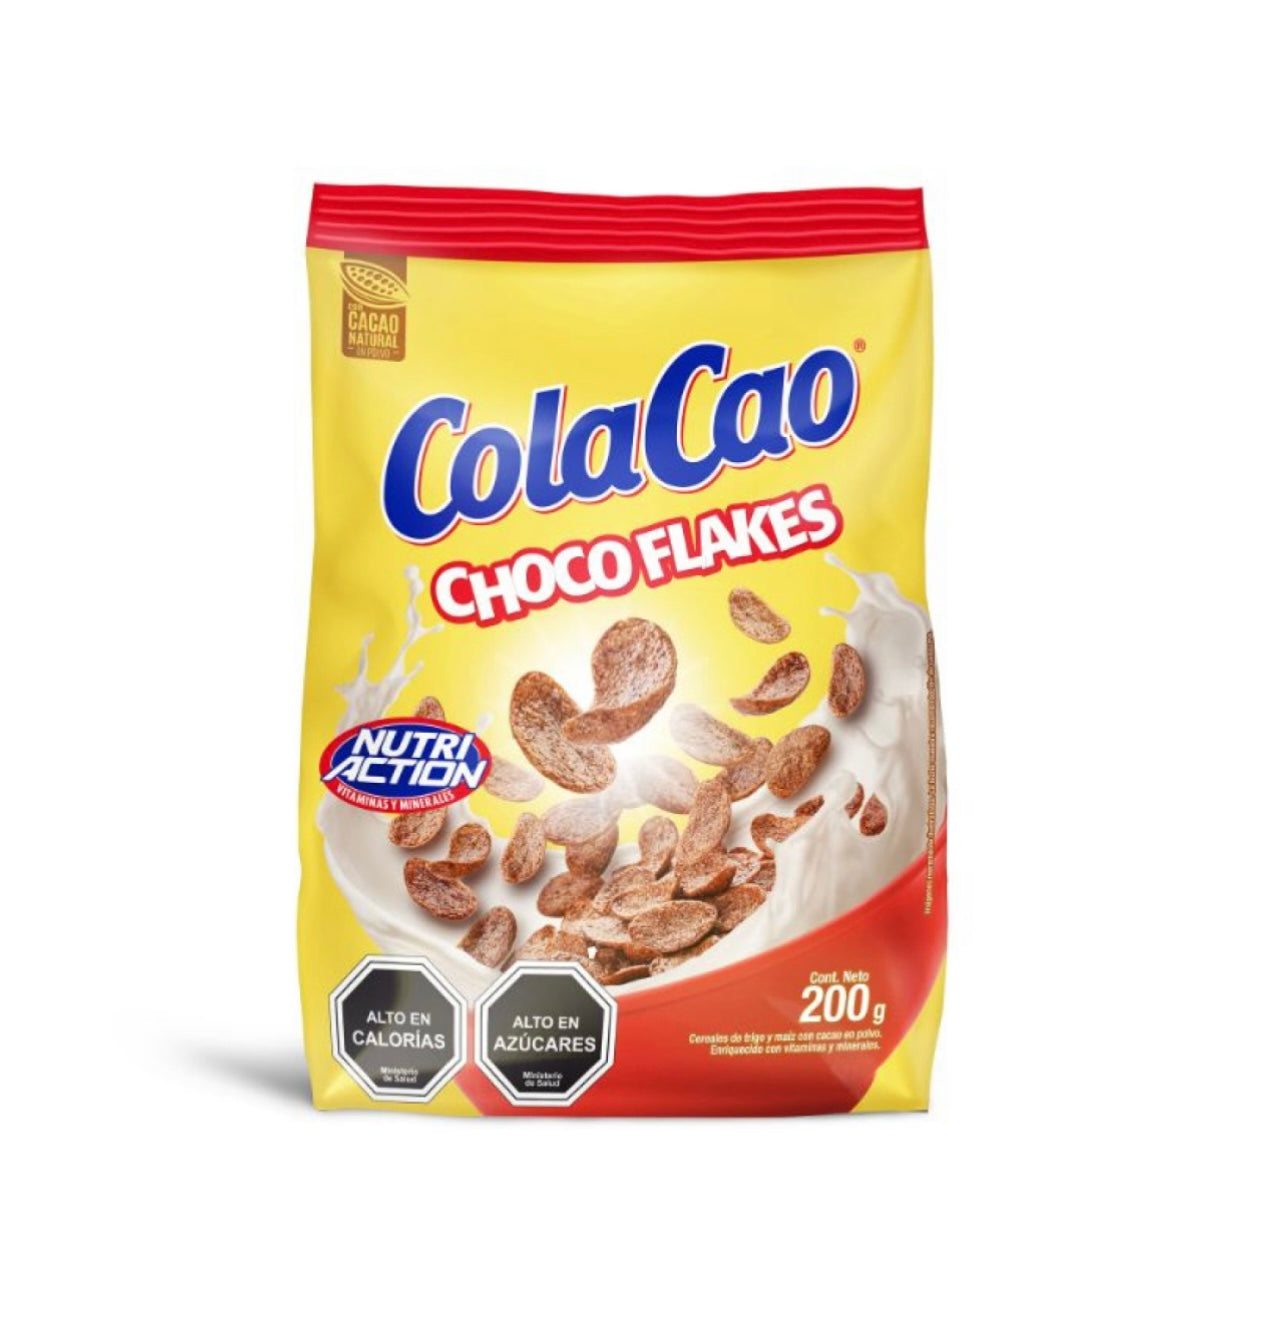 Cola cao choco flakes 200gr – Chilena Cossas